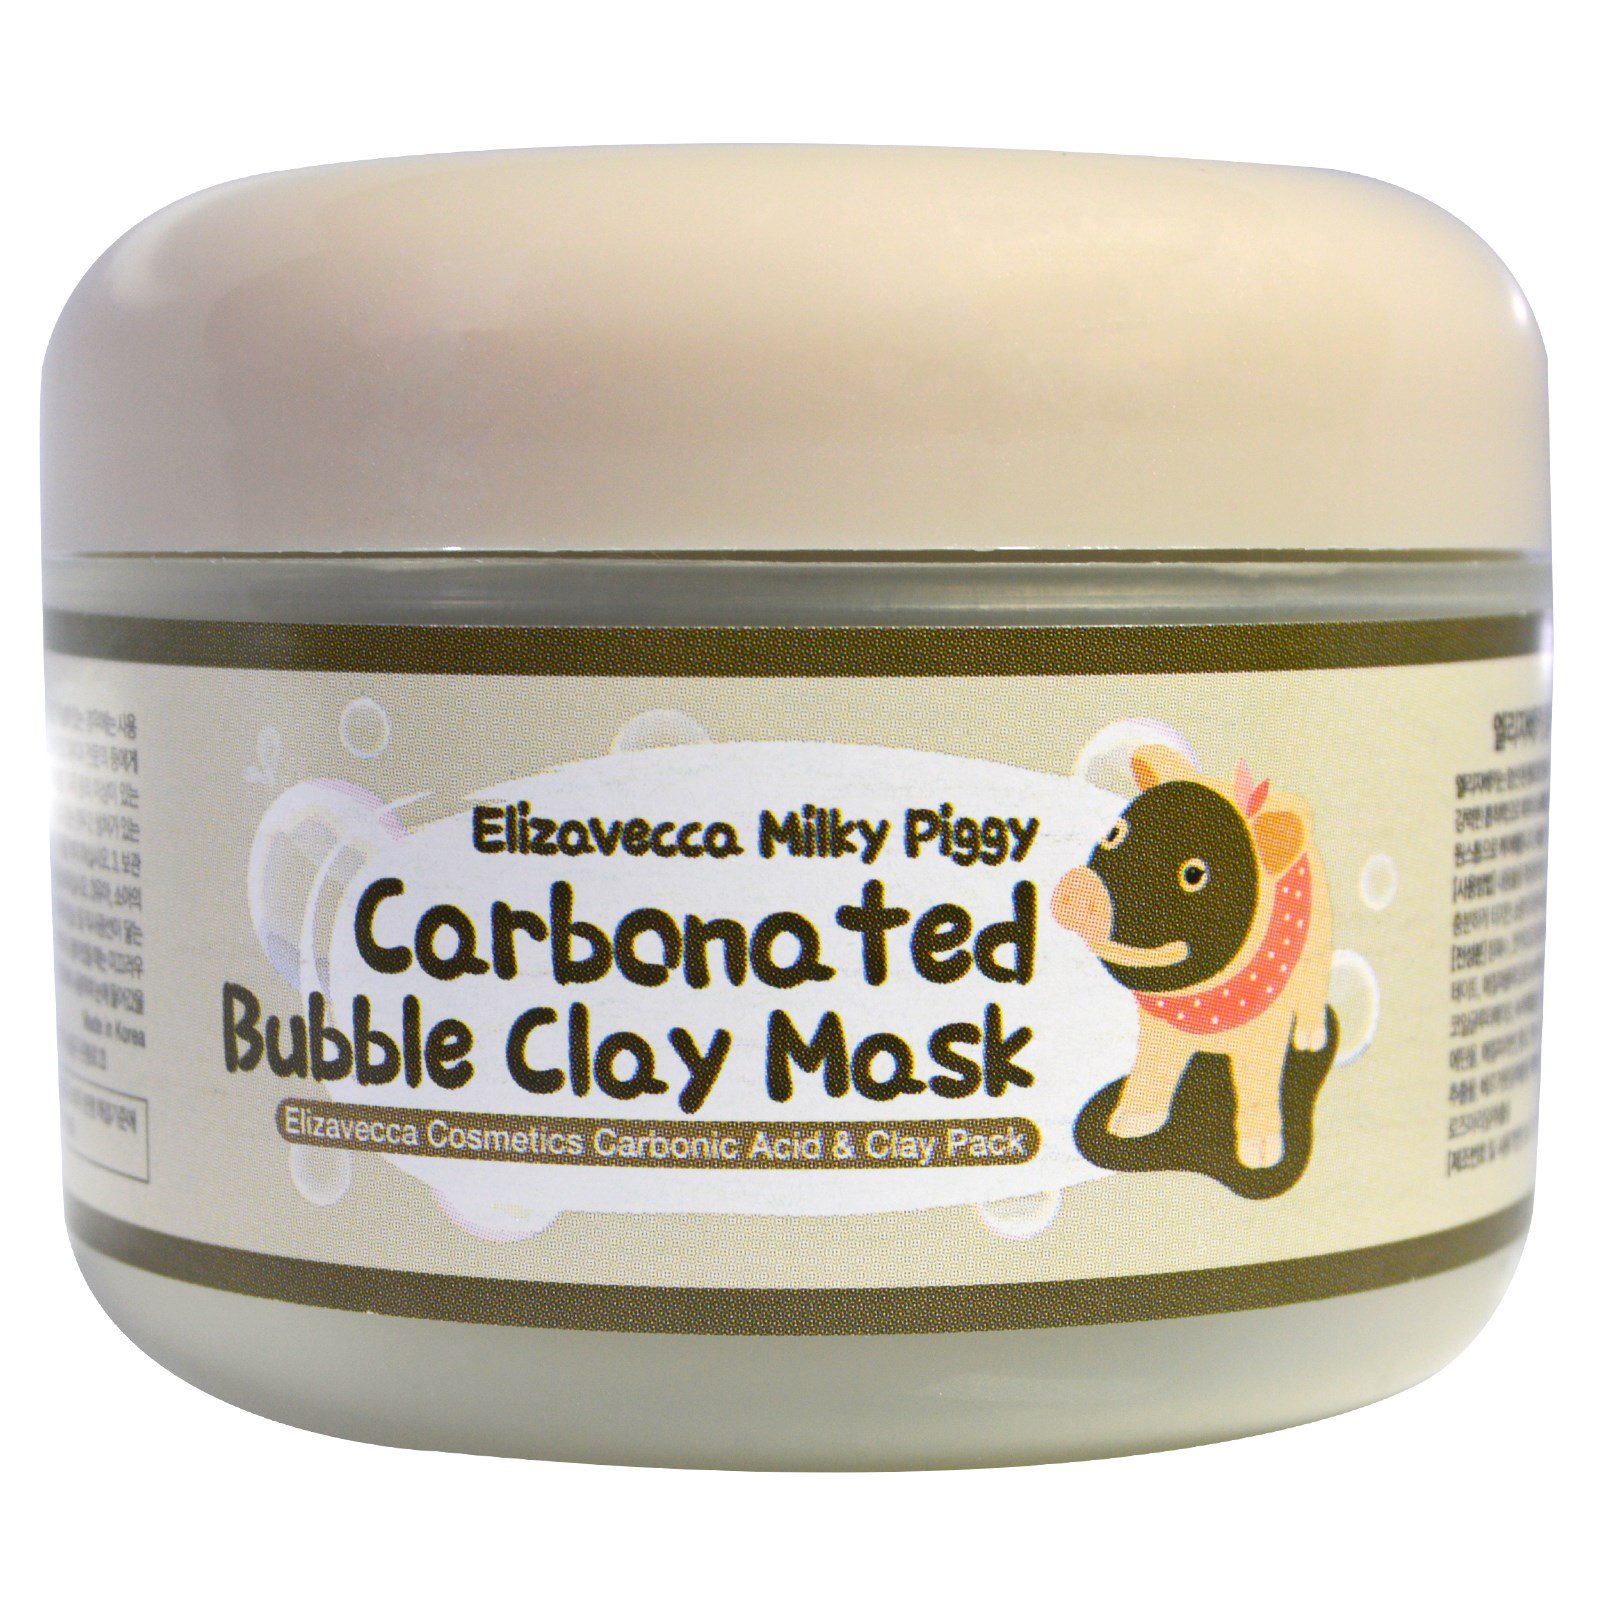 https://ru.iherb.com/pr/Elizavecca-Milky-Piggy-Carbonated-Bubble-Clay-Mask-100-g/68346?rcode=KGR603&pcode=BBTEN  